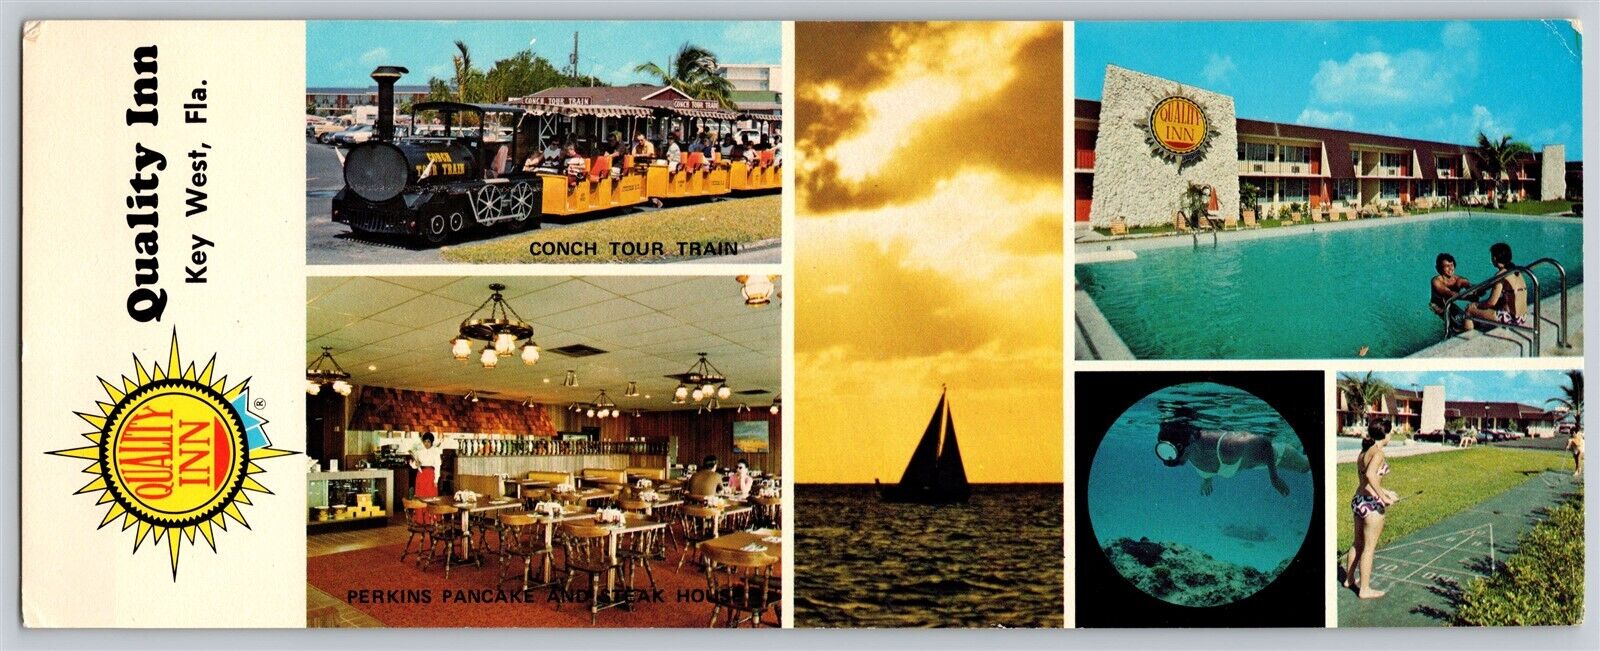 Key West FL Quality Inn Hotel Motel Perkins Pancake House Vtg Postcard Oversized